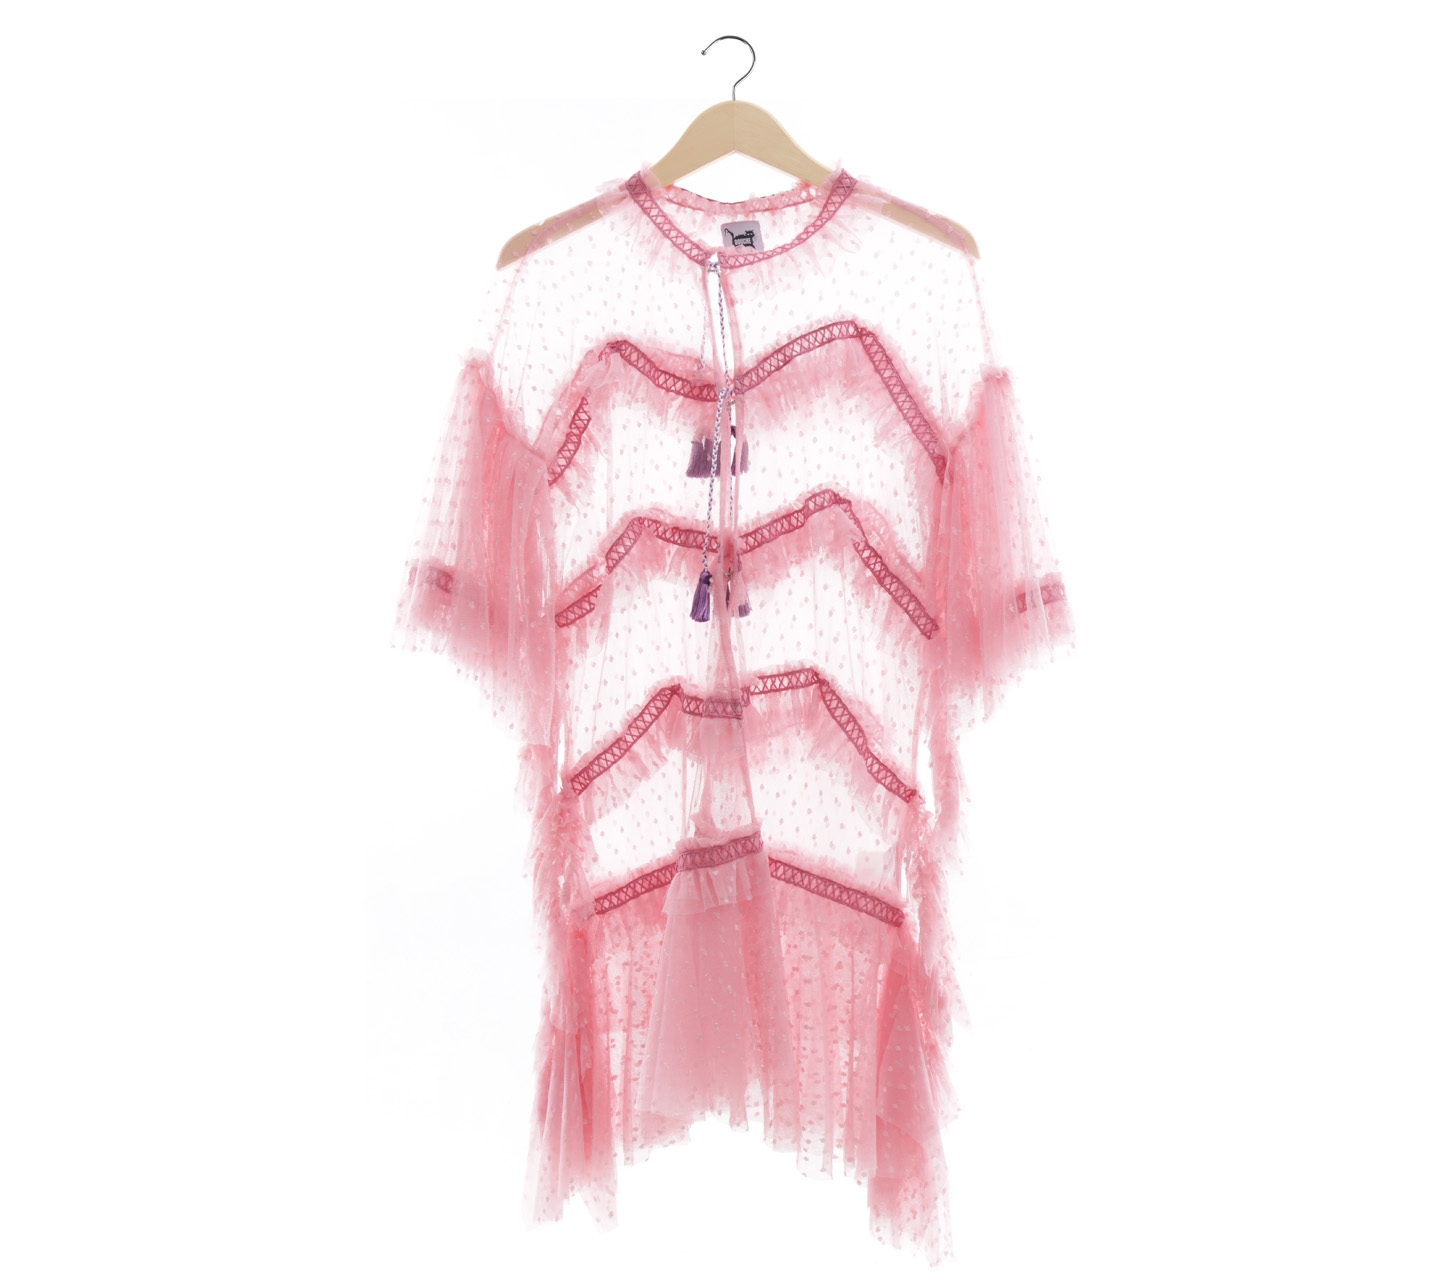 Douche Pink Seethrough Outerwear